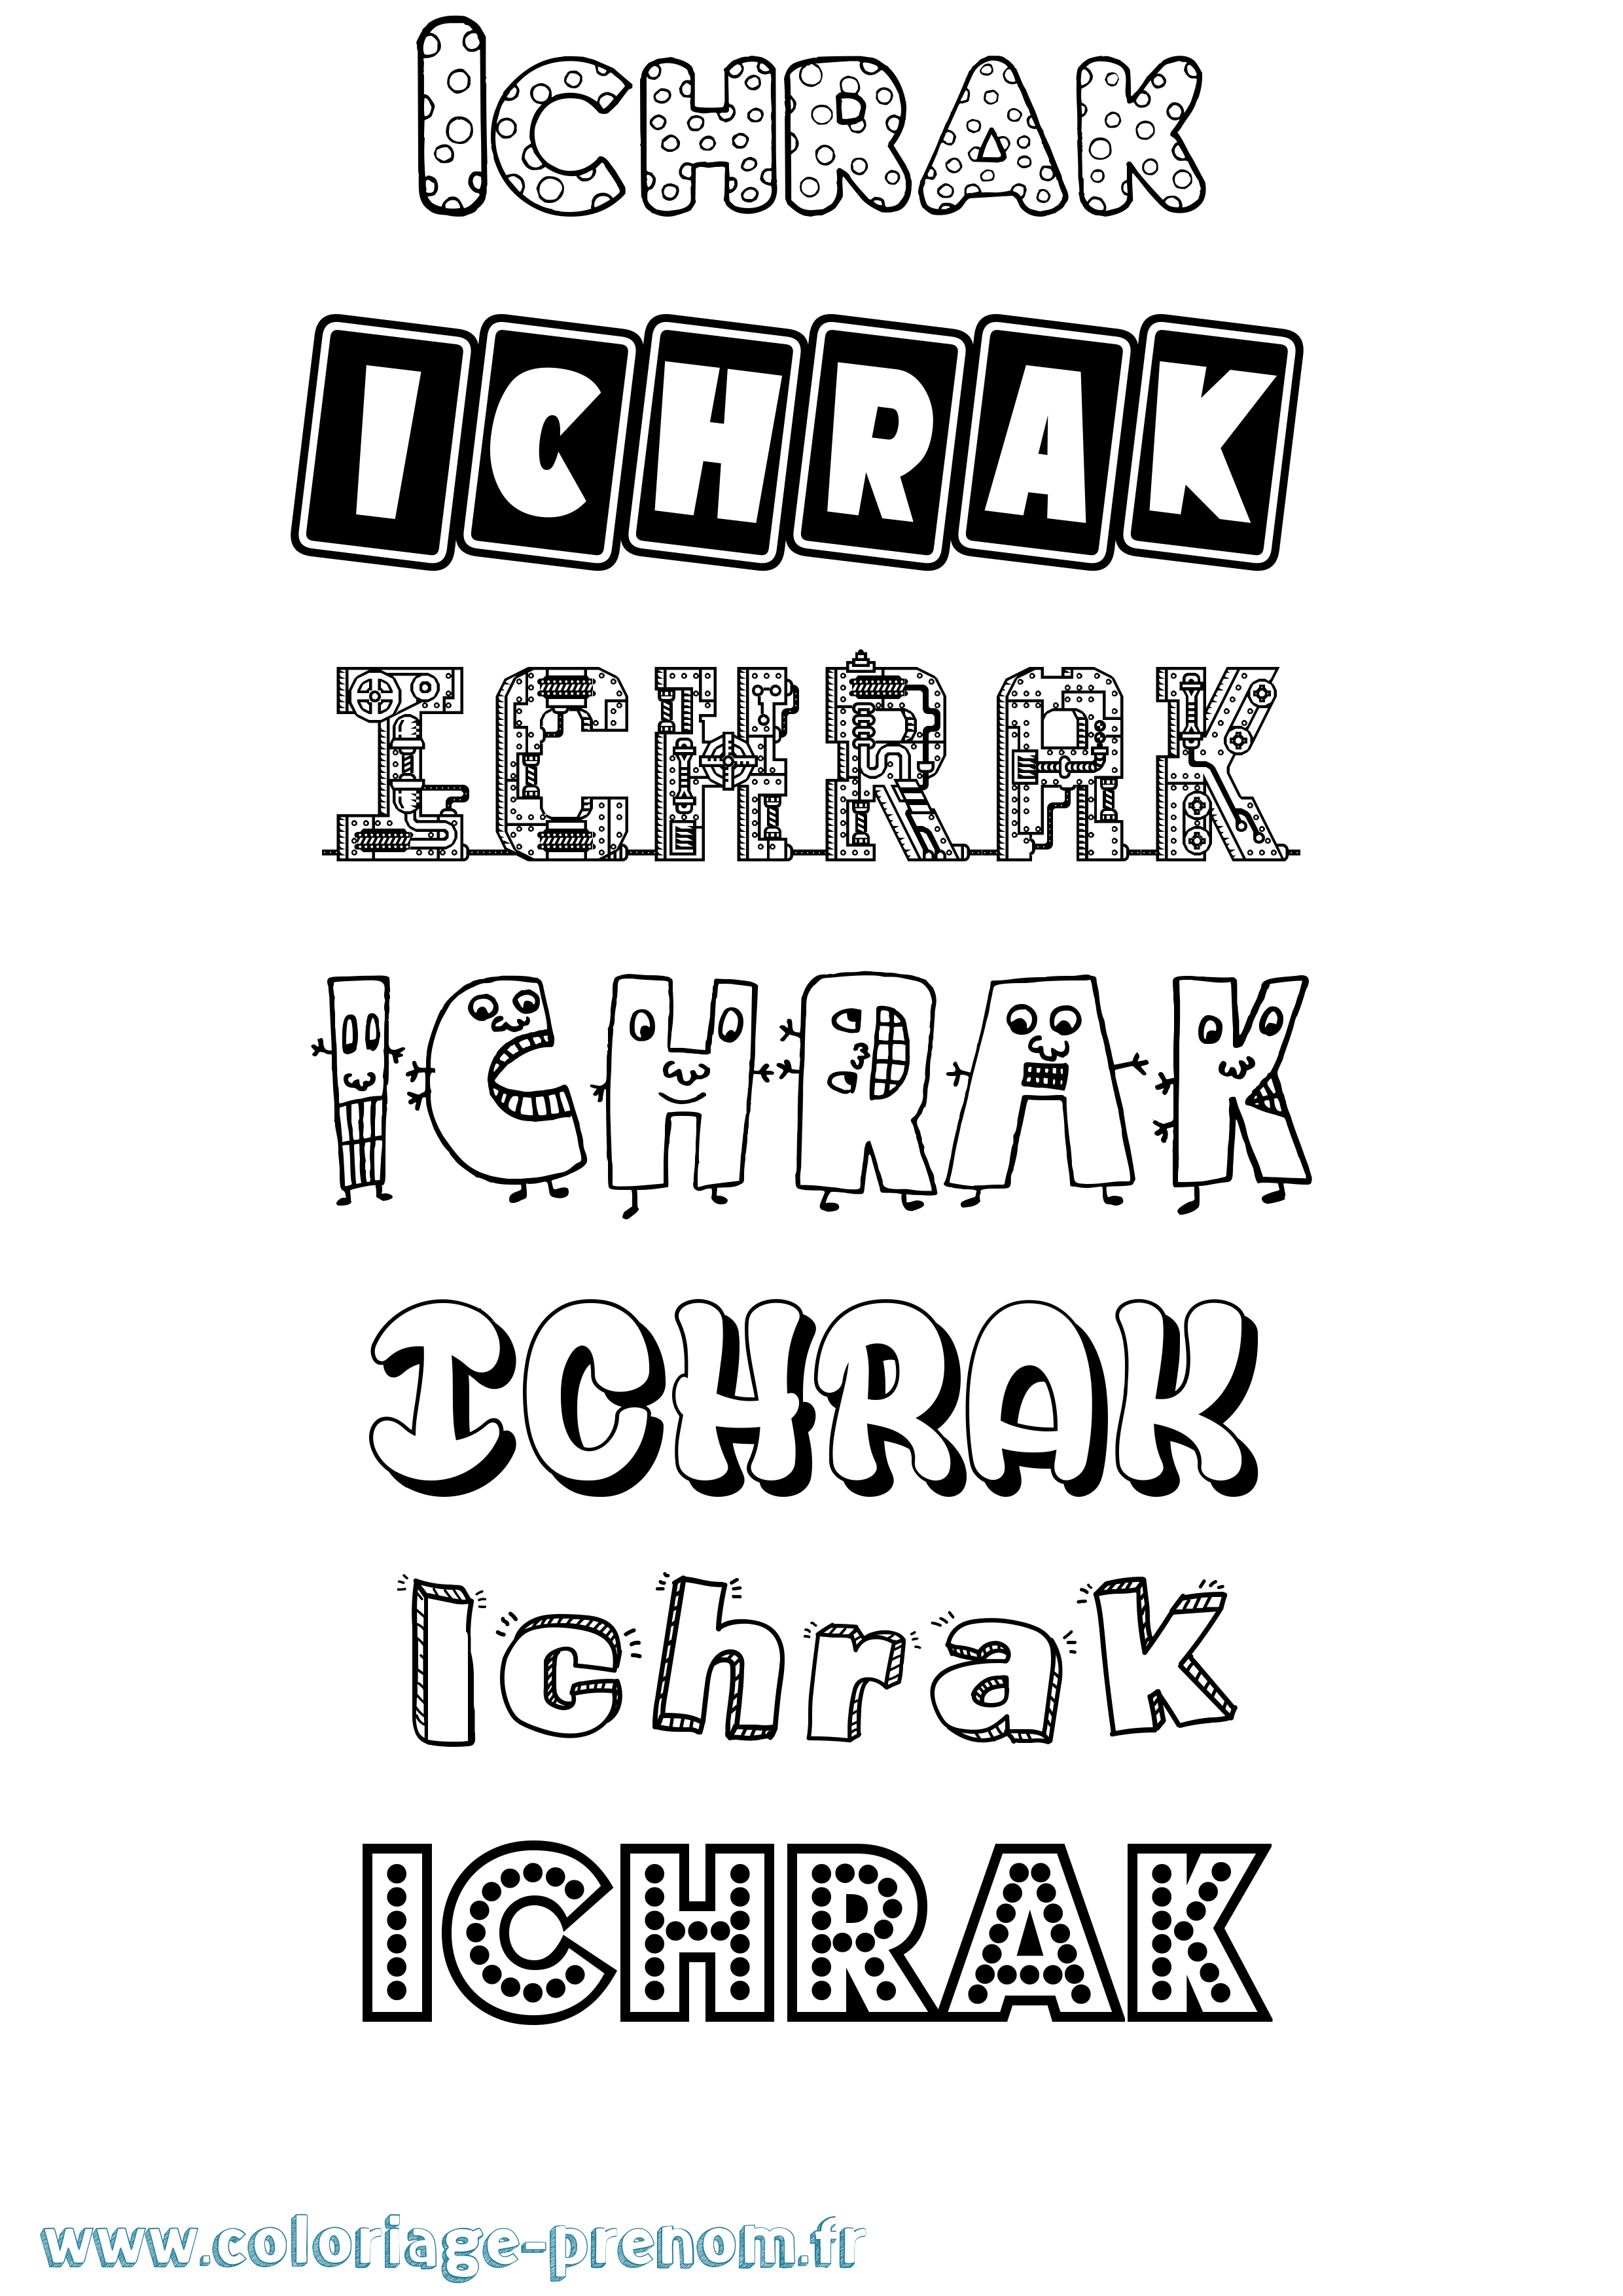 Coloriage prénom Ichrak Fun